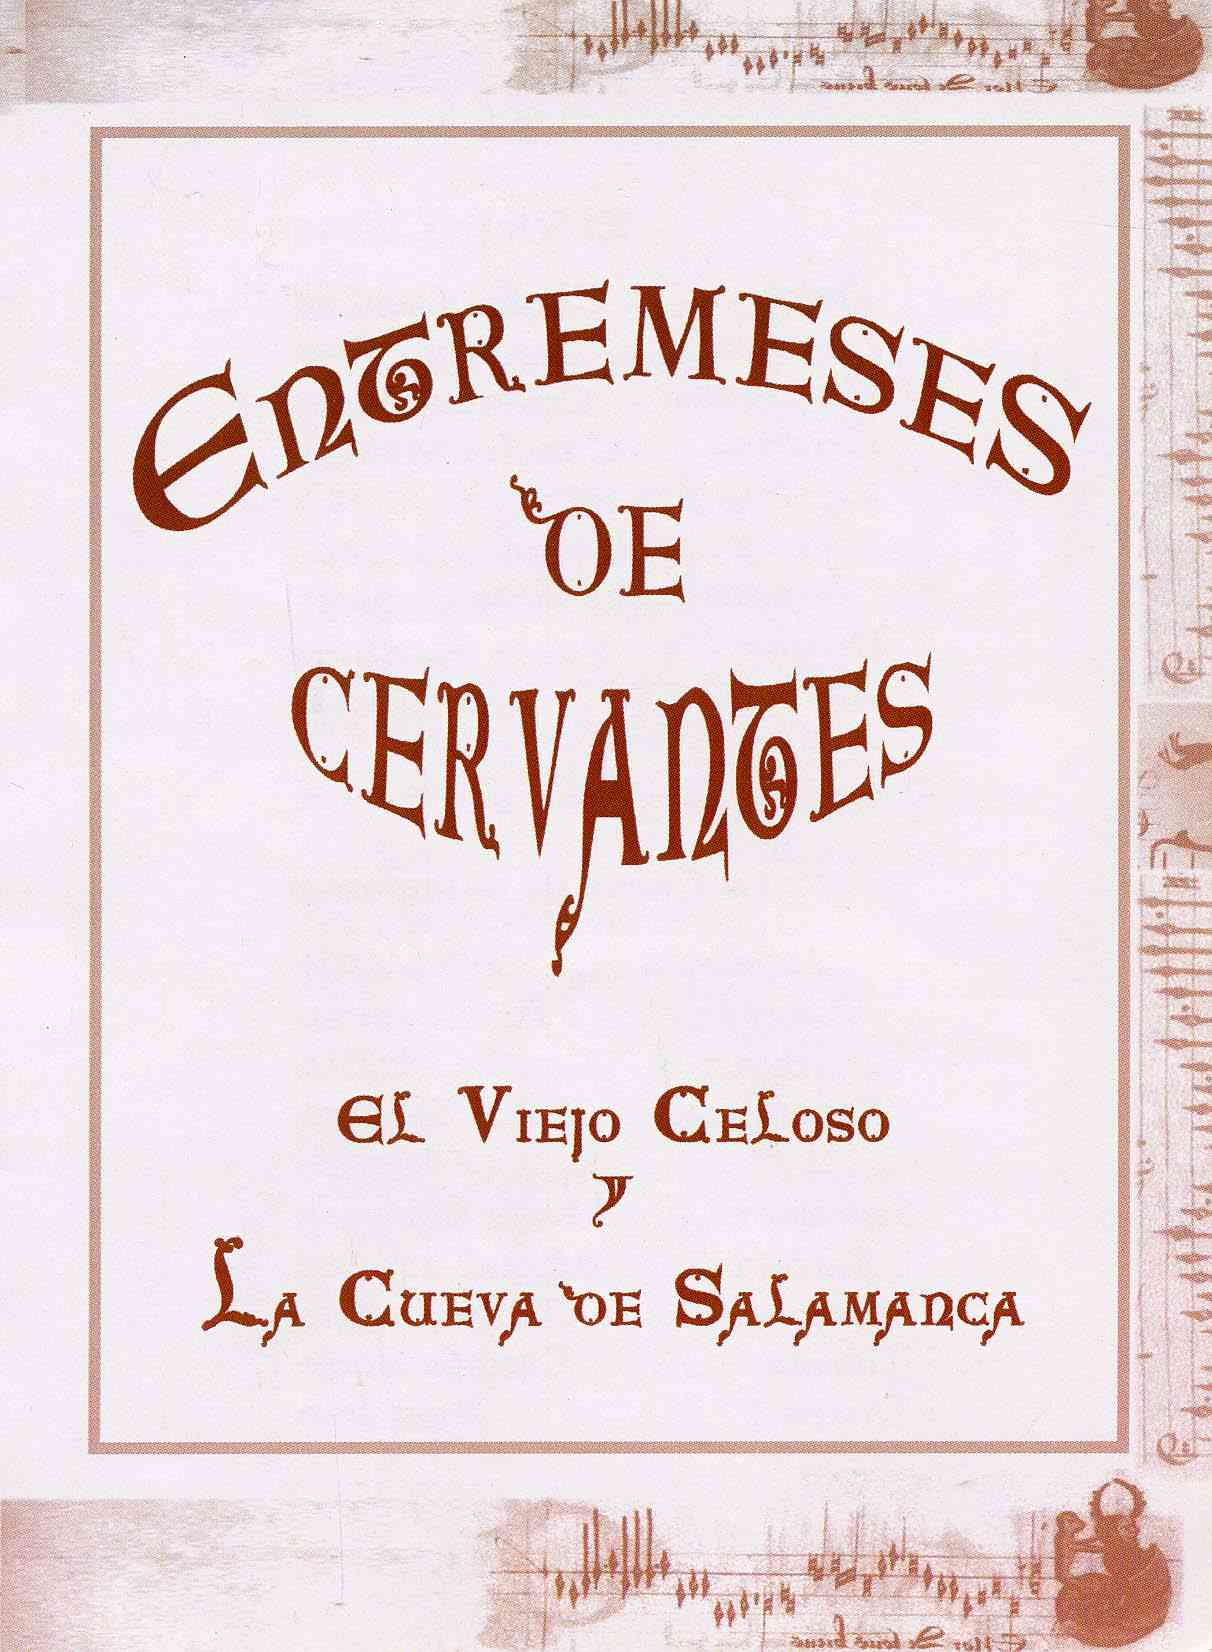 Entremeses de Cervantes